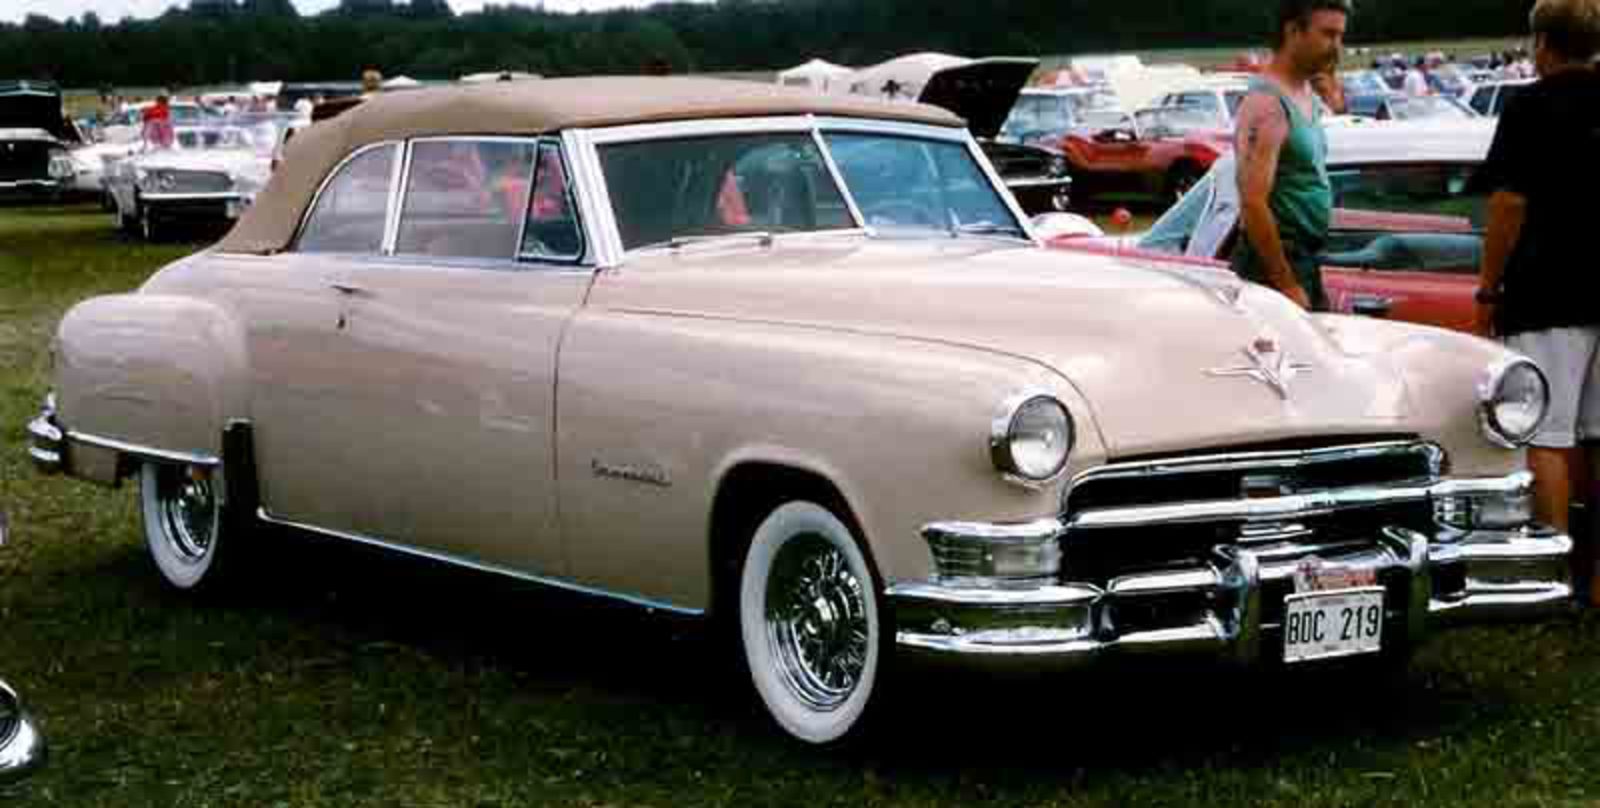 File:Chrysler Imperial Convertible 1951.jpg - Wikimedia Commons